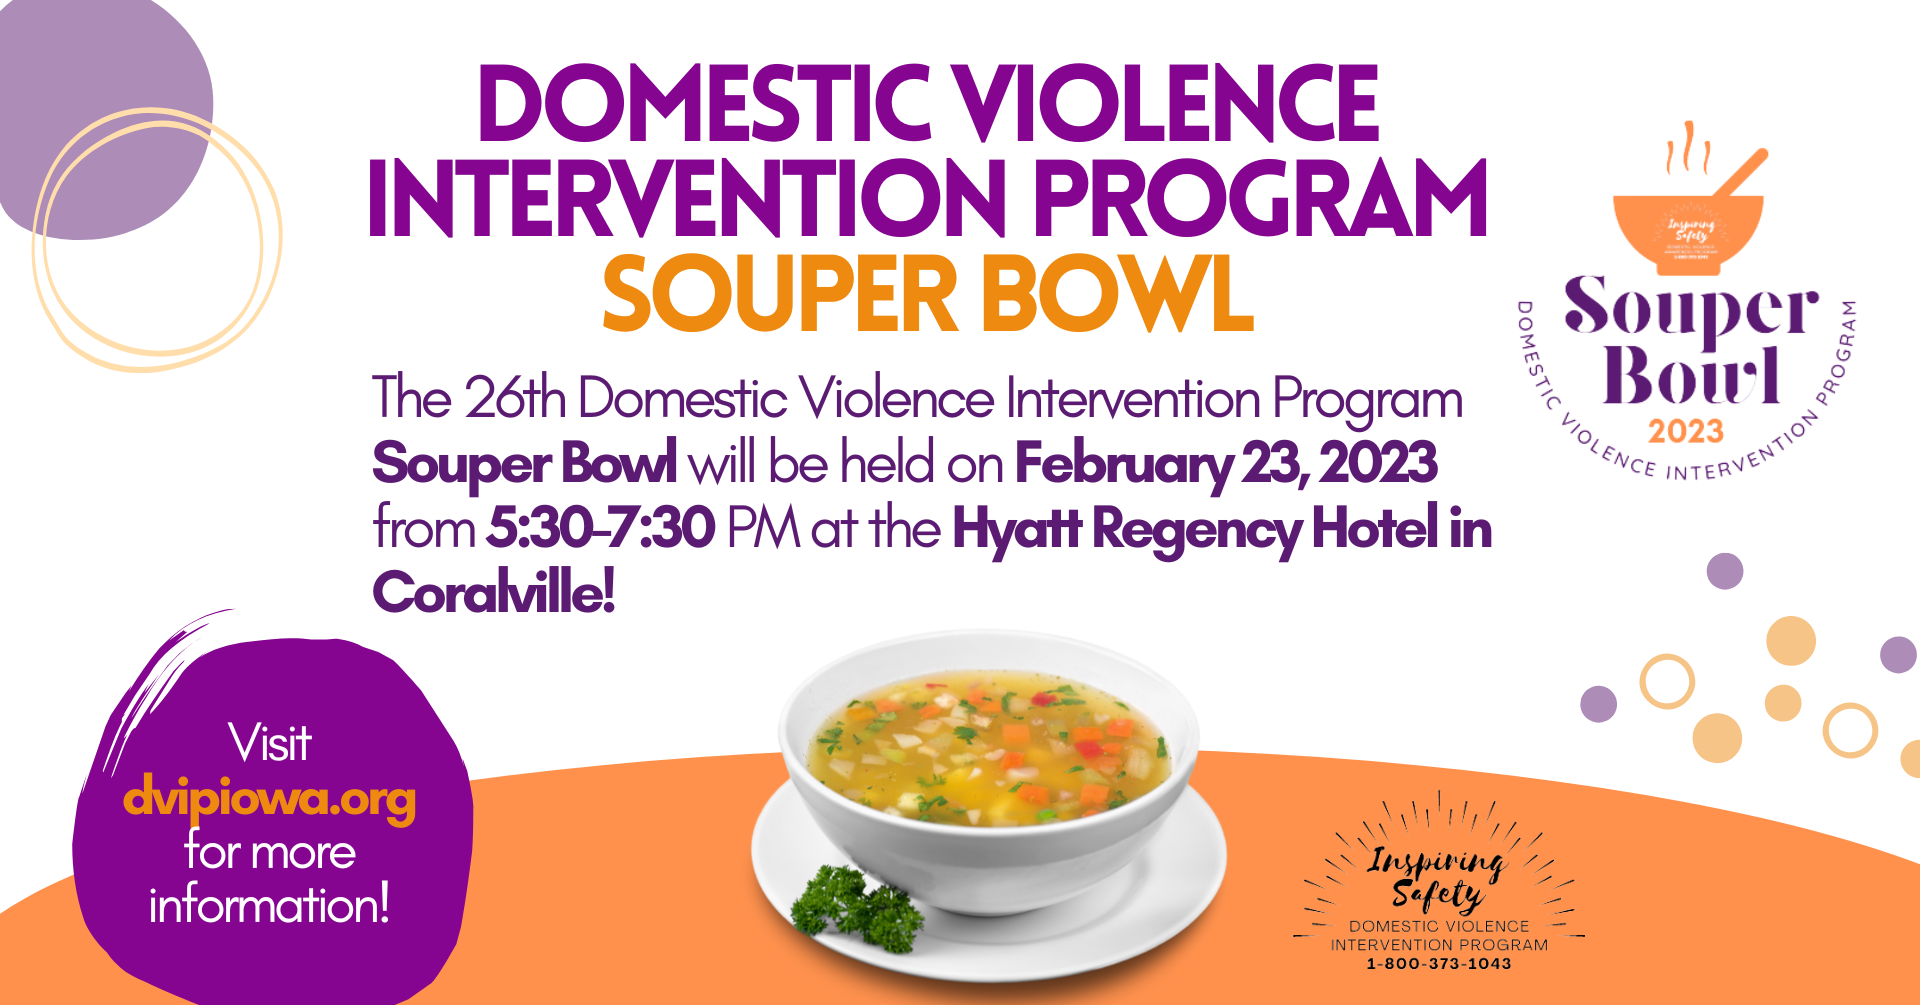 Domestic Violence Intervention Program Souper Bowl